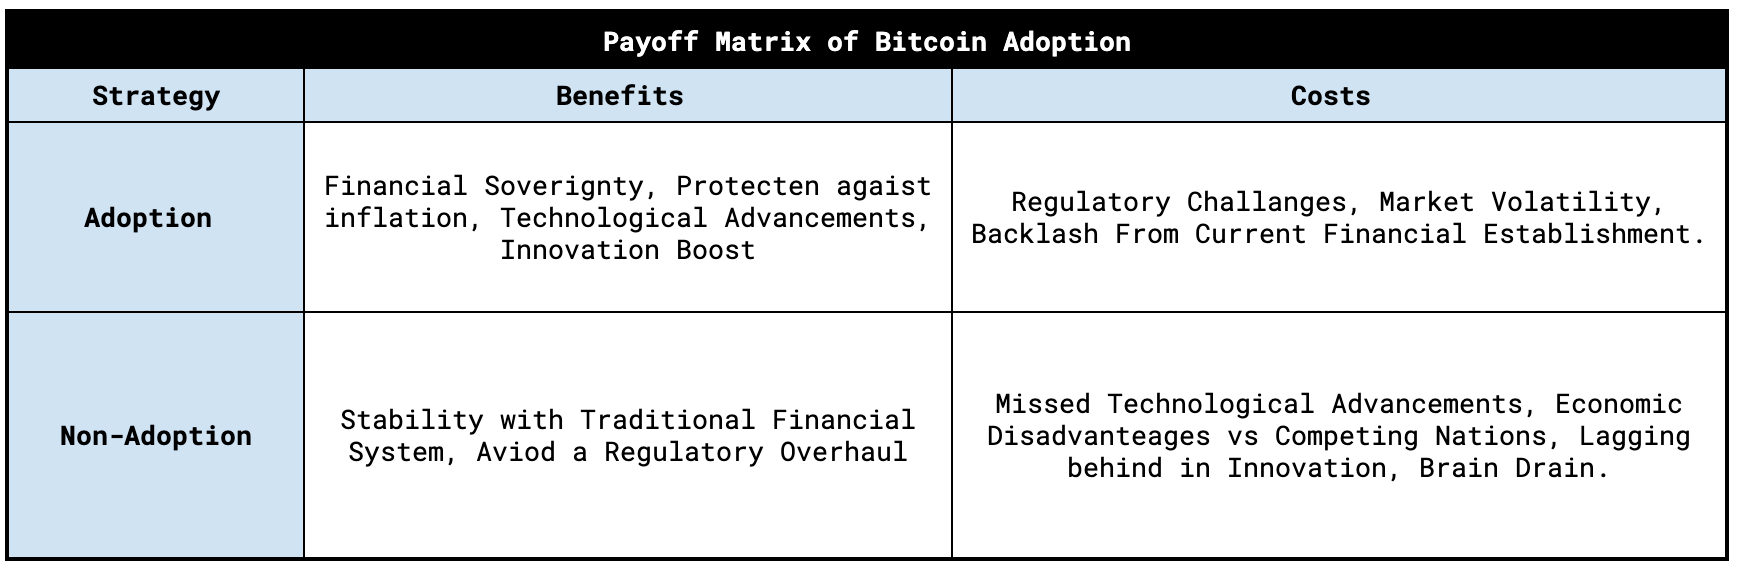 Payoff matrix of Bitcoin adoption